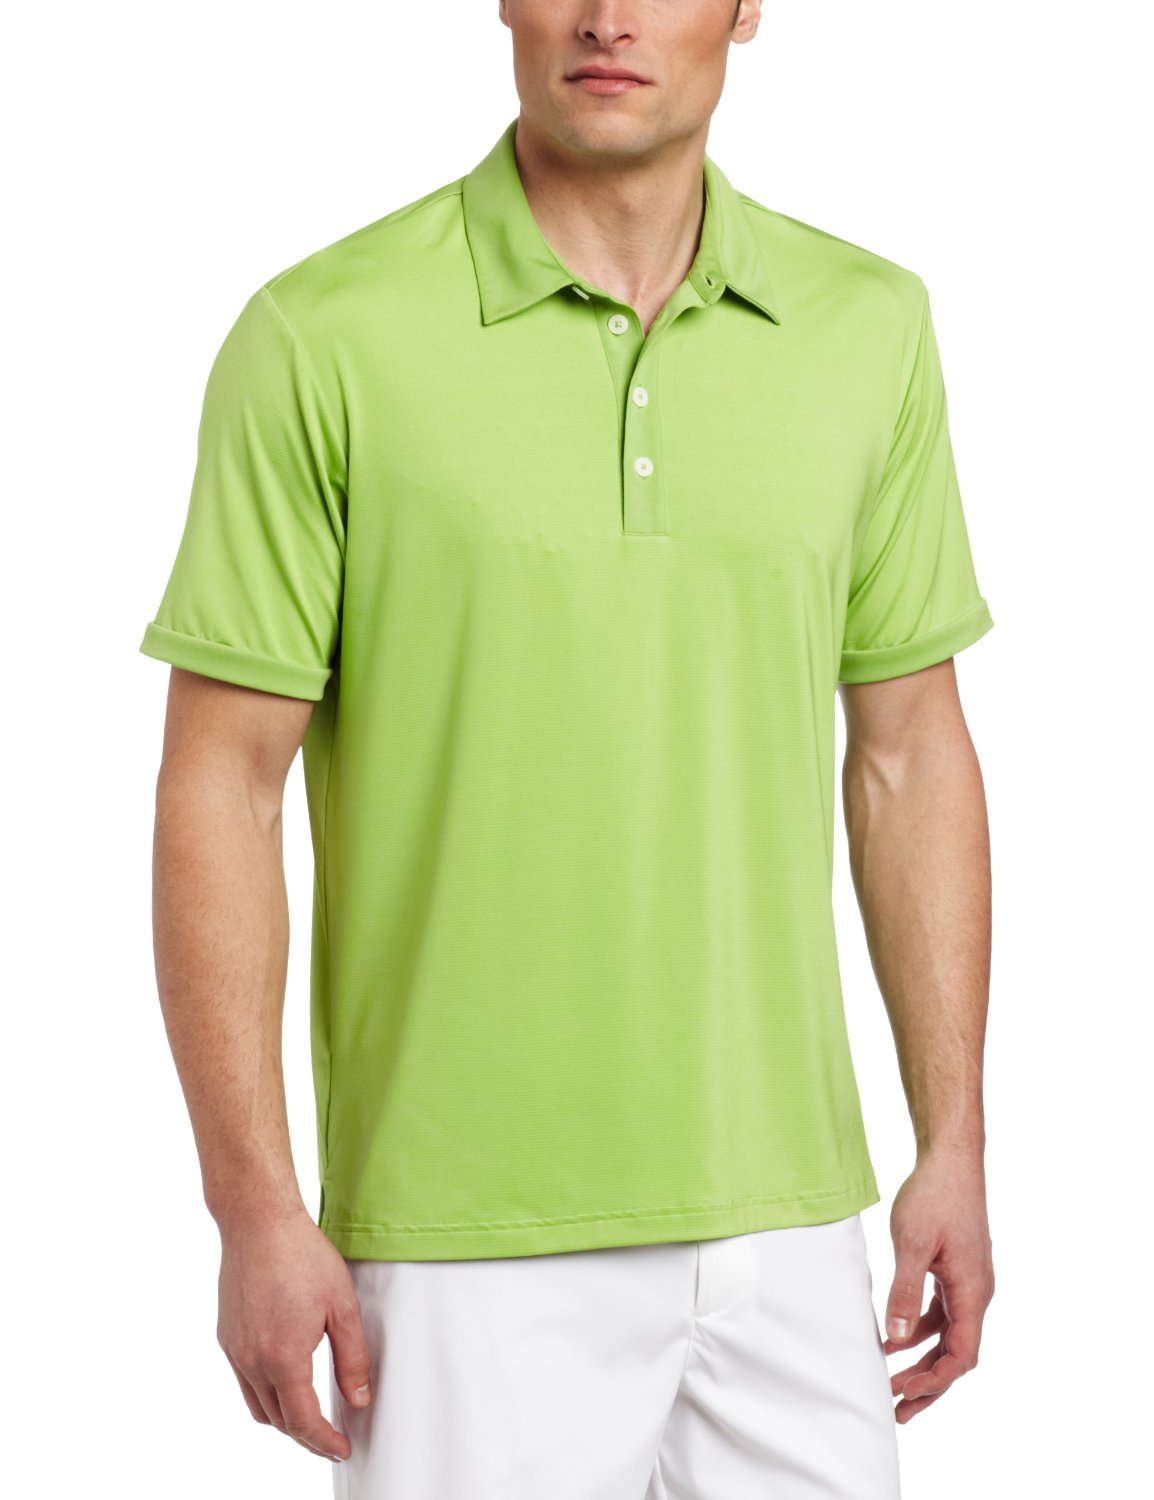 Mens Climalite Microstripe Golf Polo Shirts